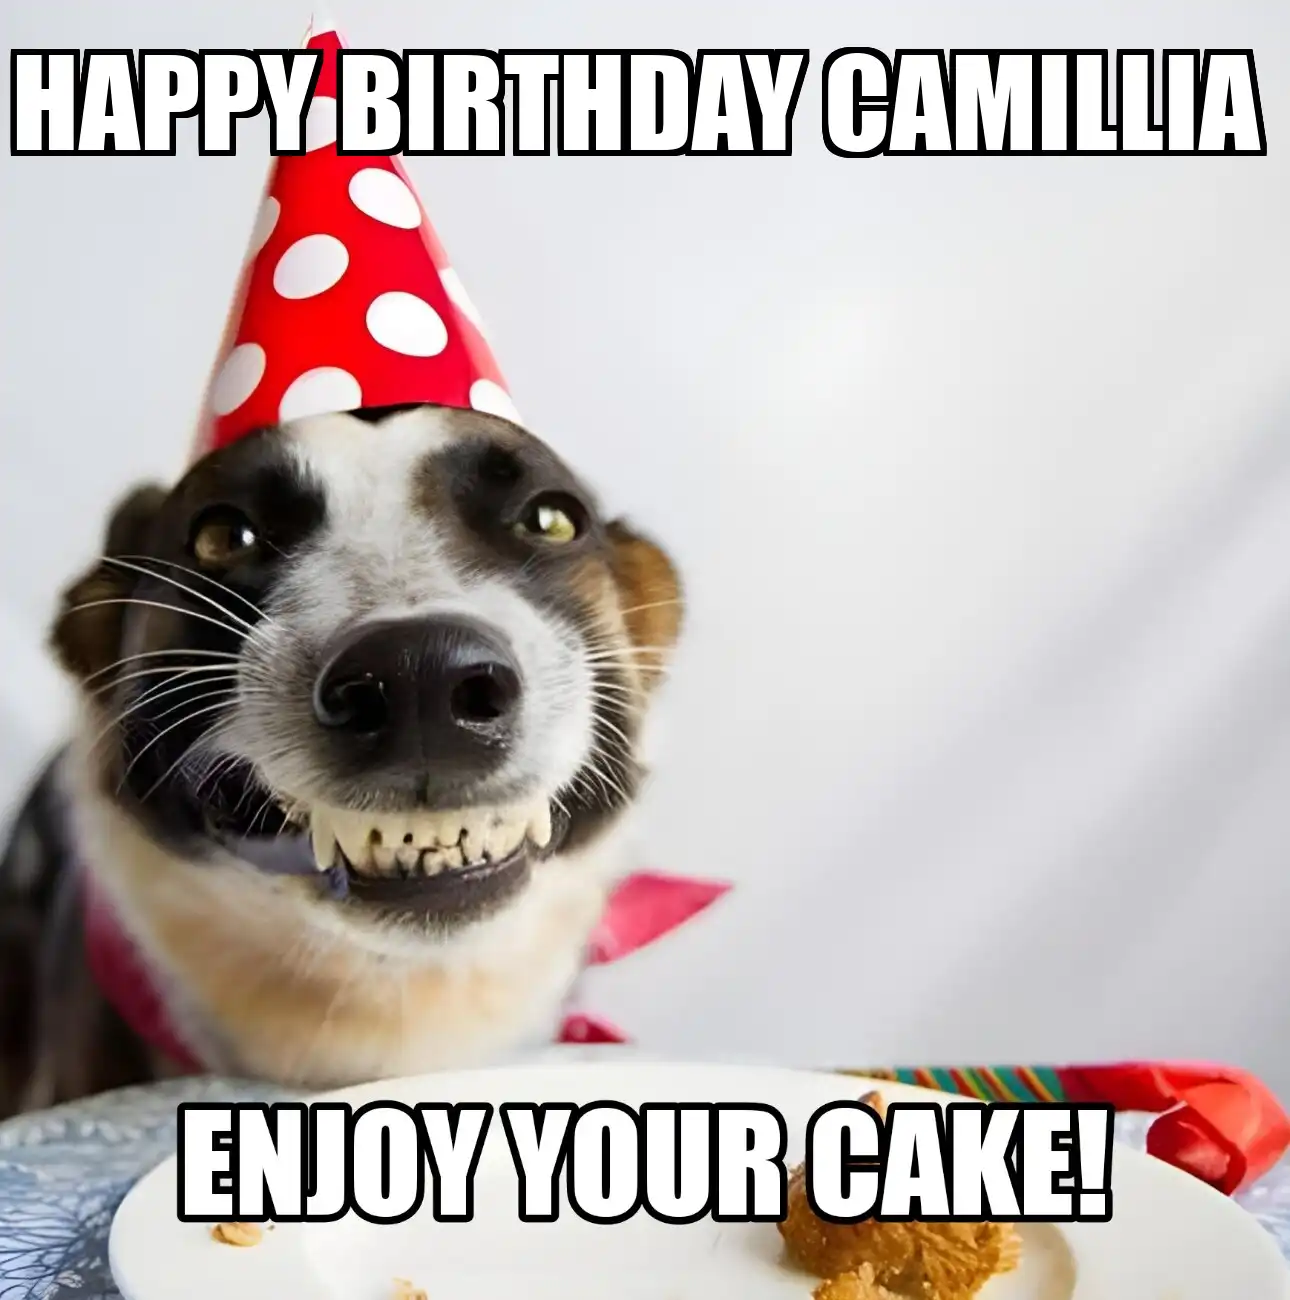 Happy Birthday Camillia Enjoy Your Cake Dog Meme